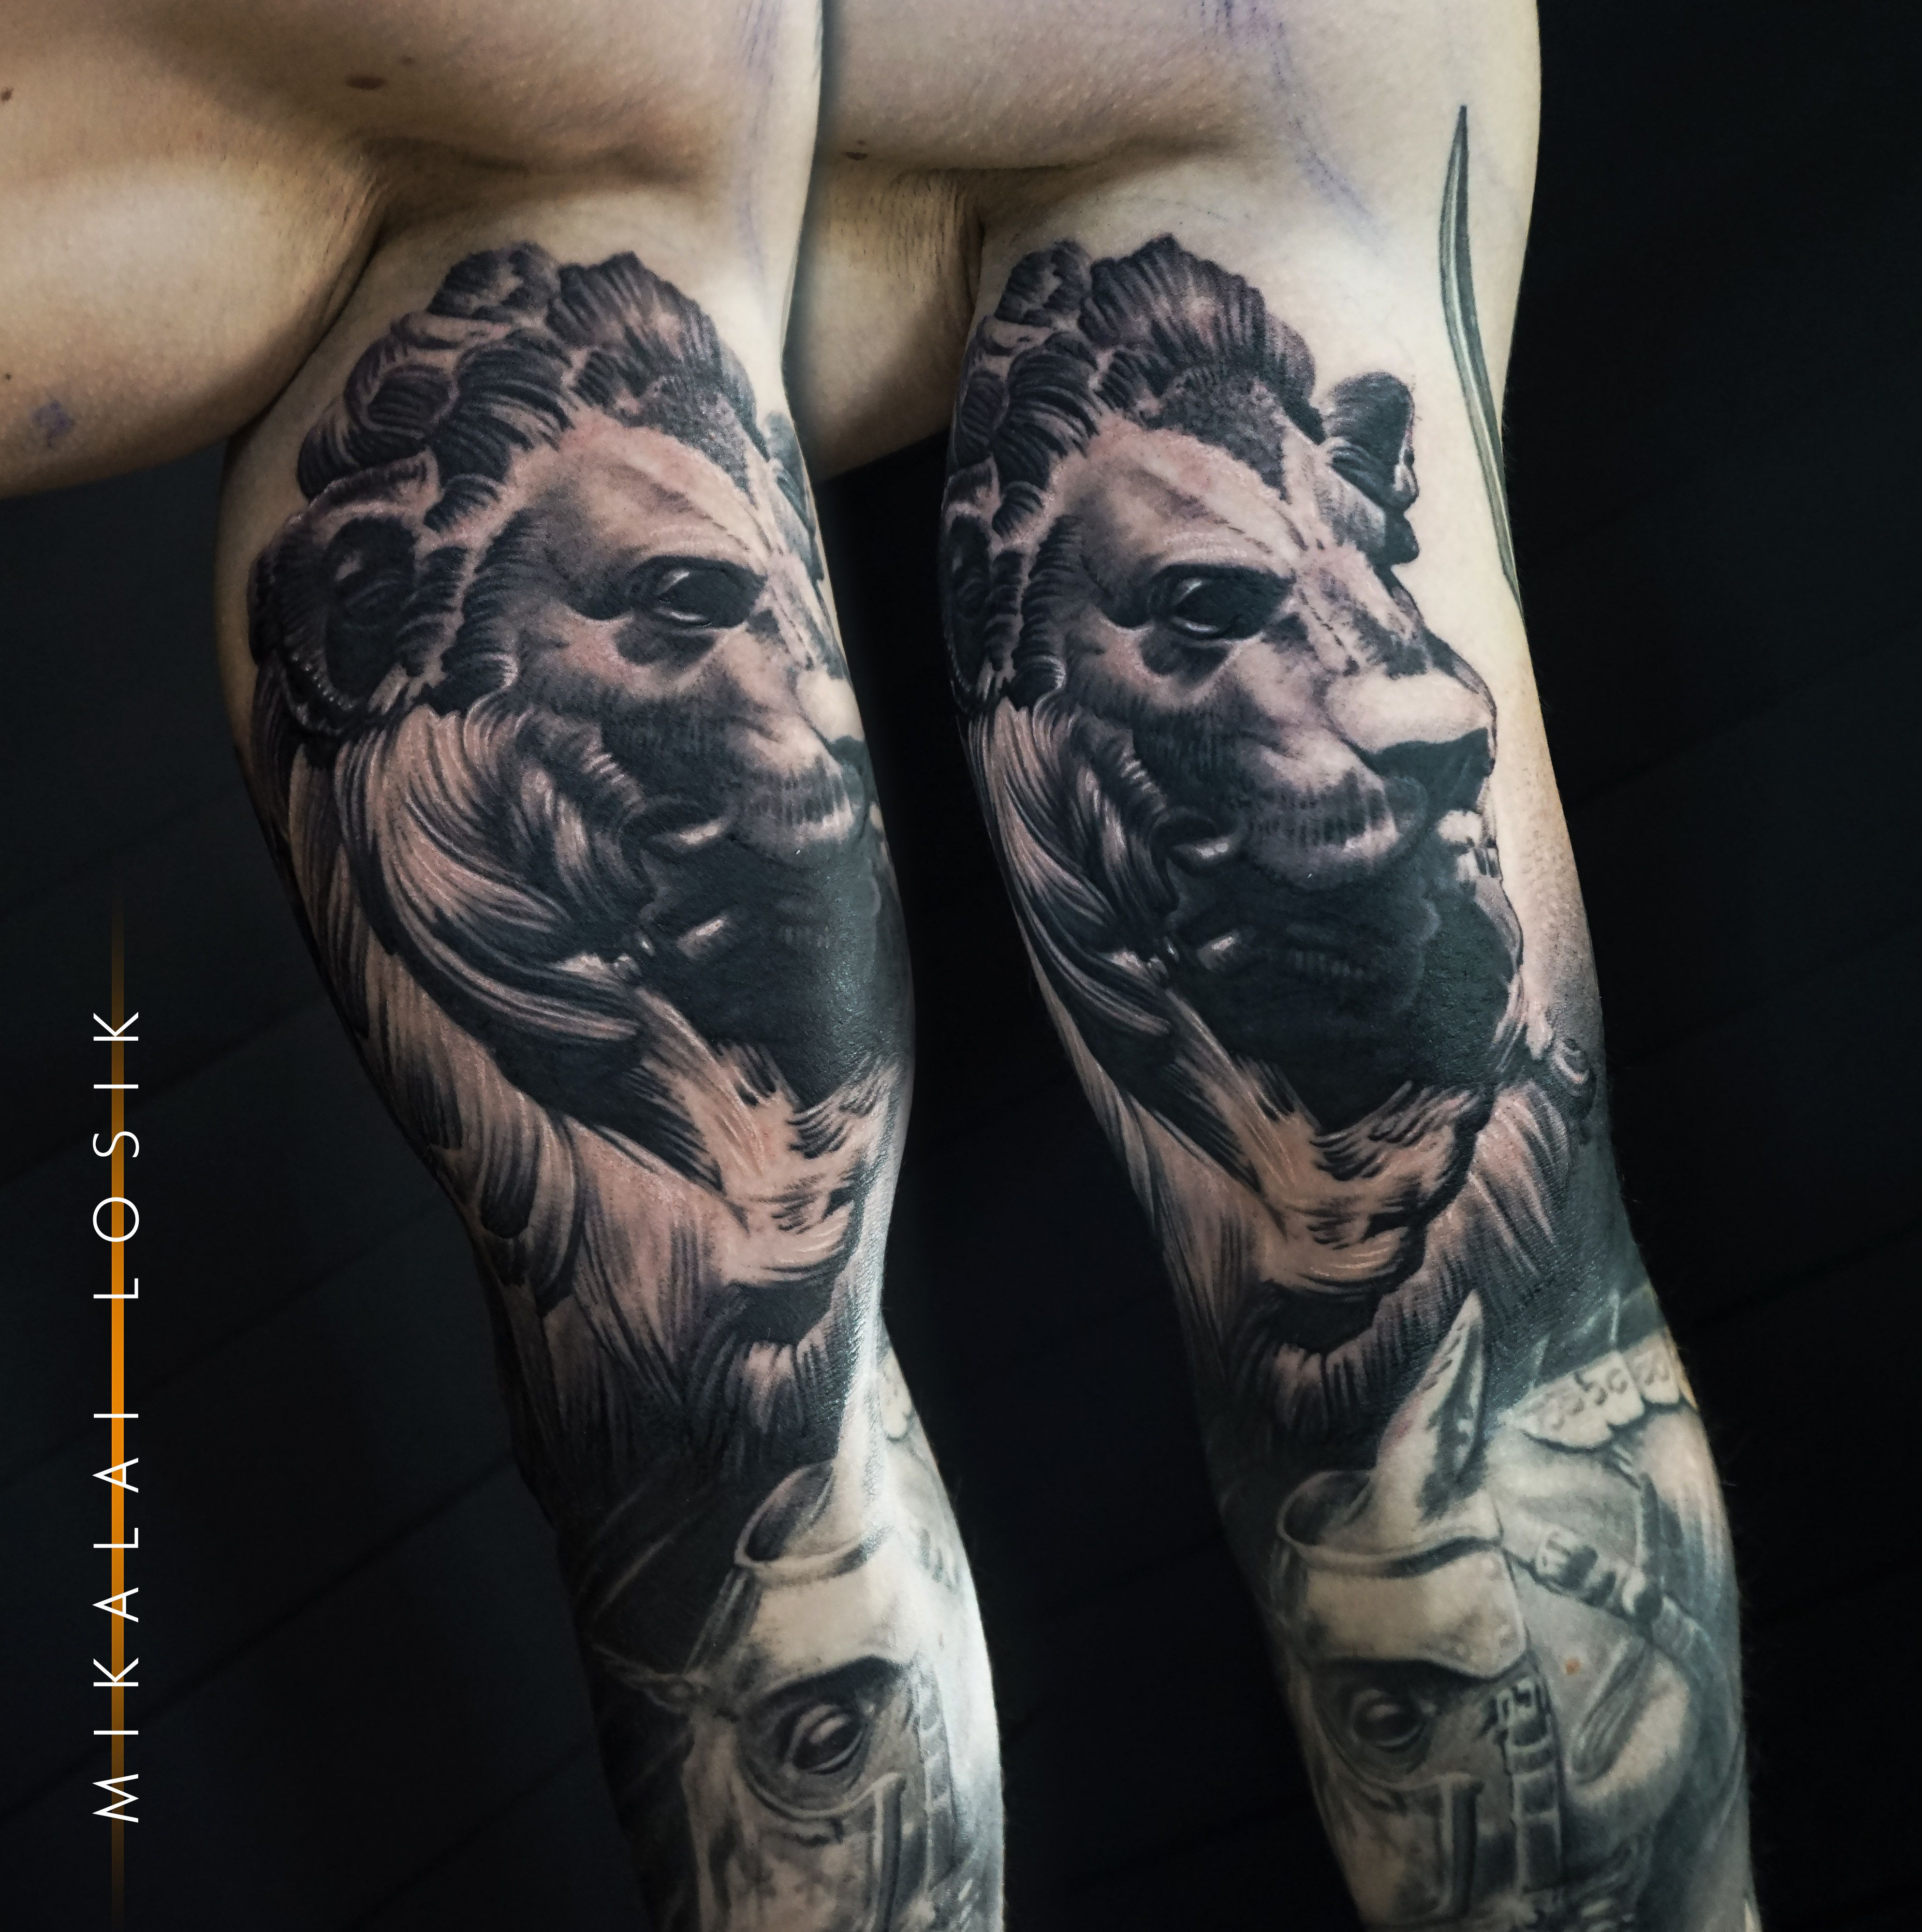 Tomash Blaszczak Tattoo Artist - 1st class piece done by Bart yesterday :D  love it... Hydraulix Tattoos Studio 20 Drury Street, Dublin 2 0862642309  hydraulixtattoos@gmail.com | Facebook